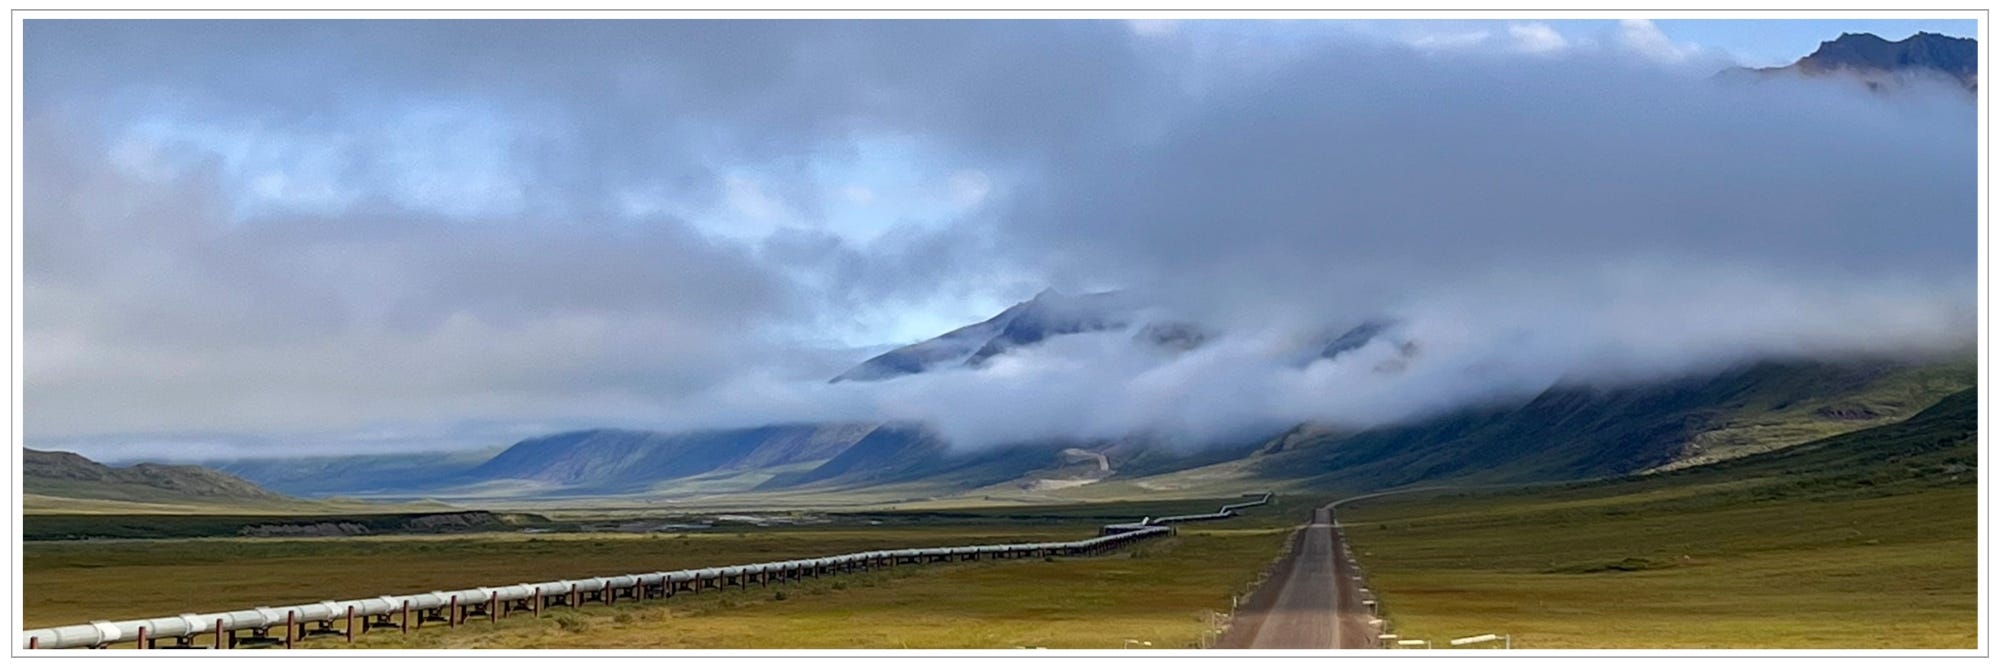 Alaska Pipeline beside Dalton dirt "highway" in Arctic tundra